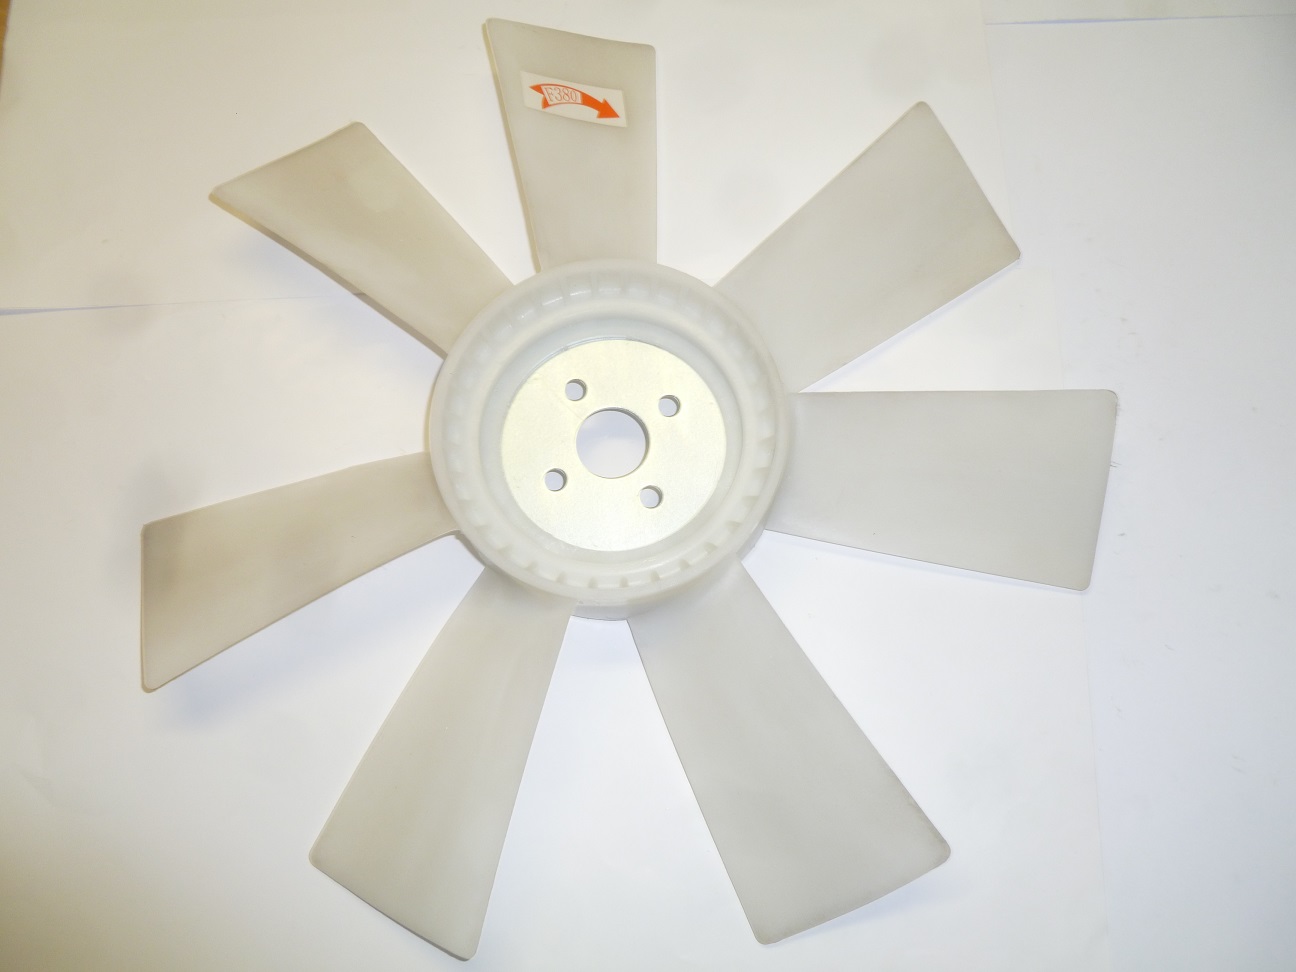 Крыльчатка вентилятора (D=380/7) WP2.1D18E2/Fan